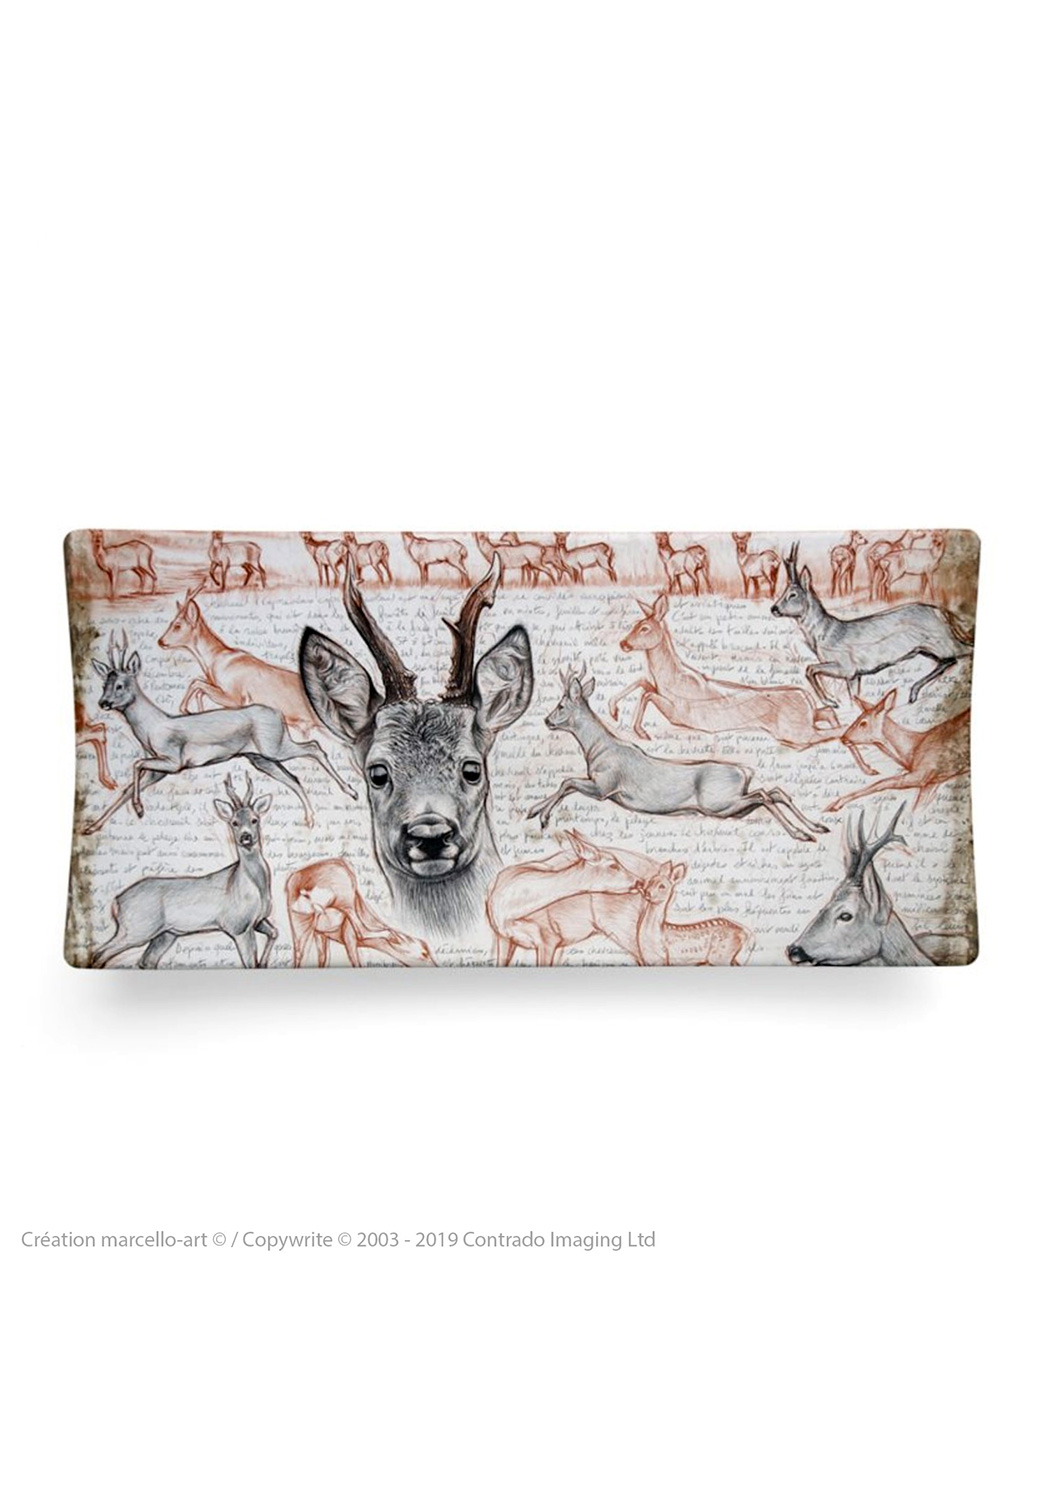 Marcello-art: Rectangular plates Rectangular plate 280 roe deer